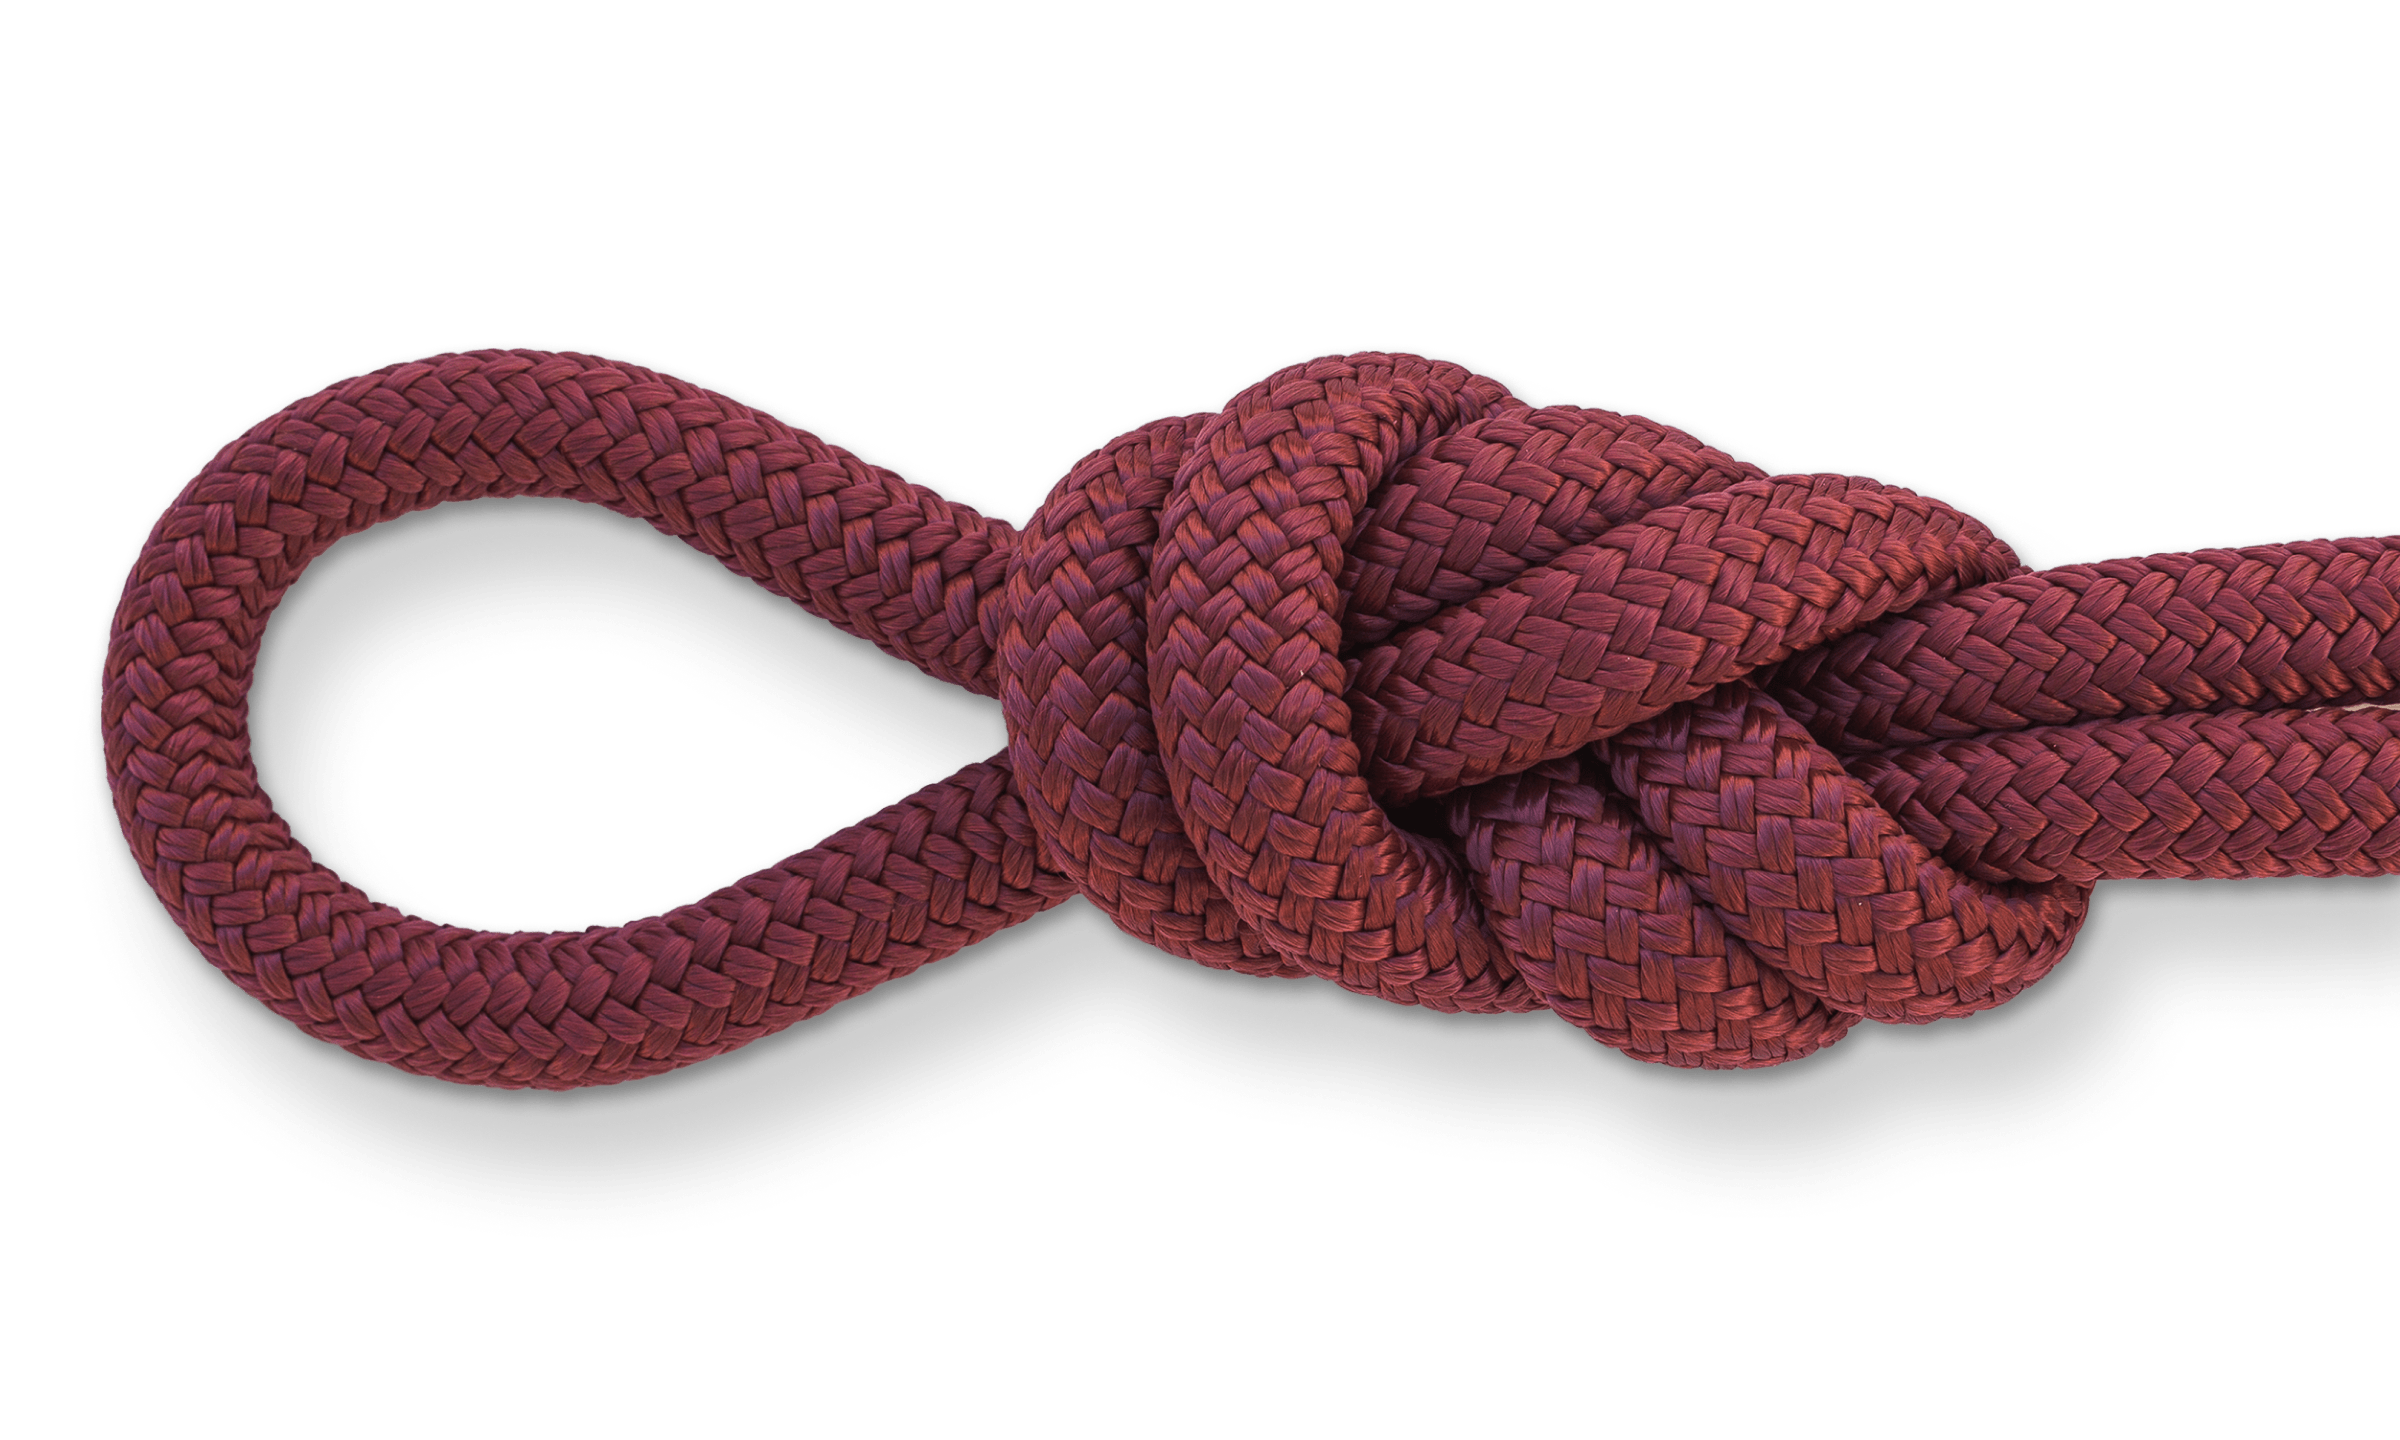 burgundy double braid nylon rope